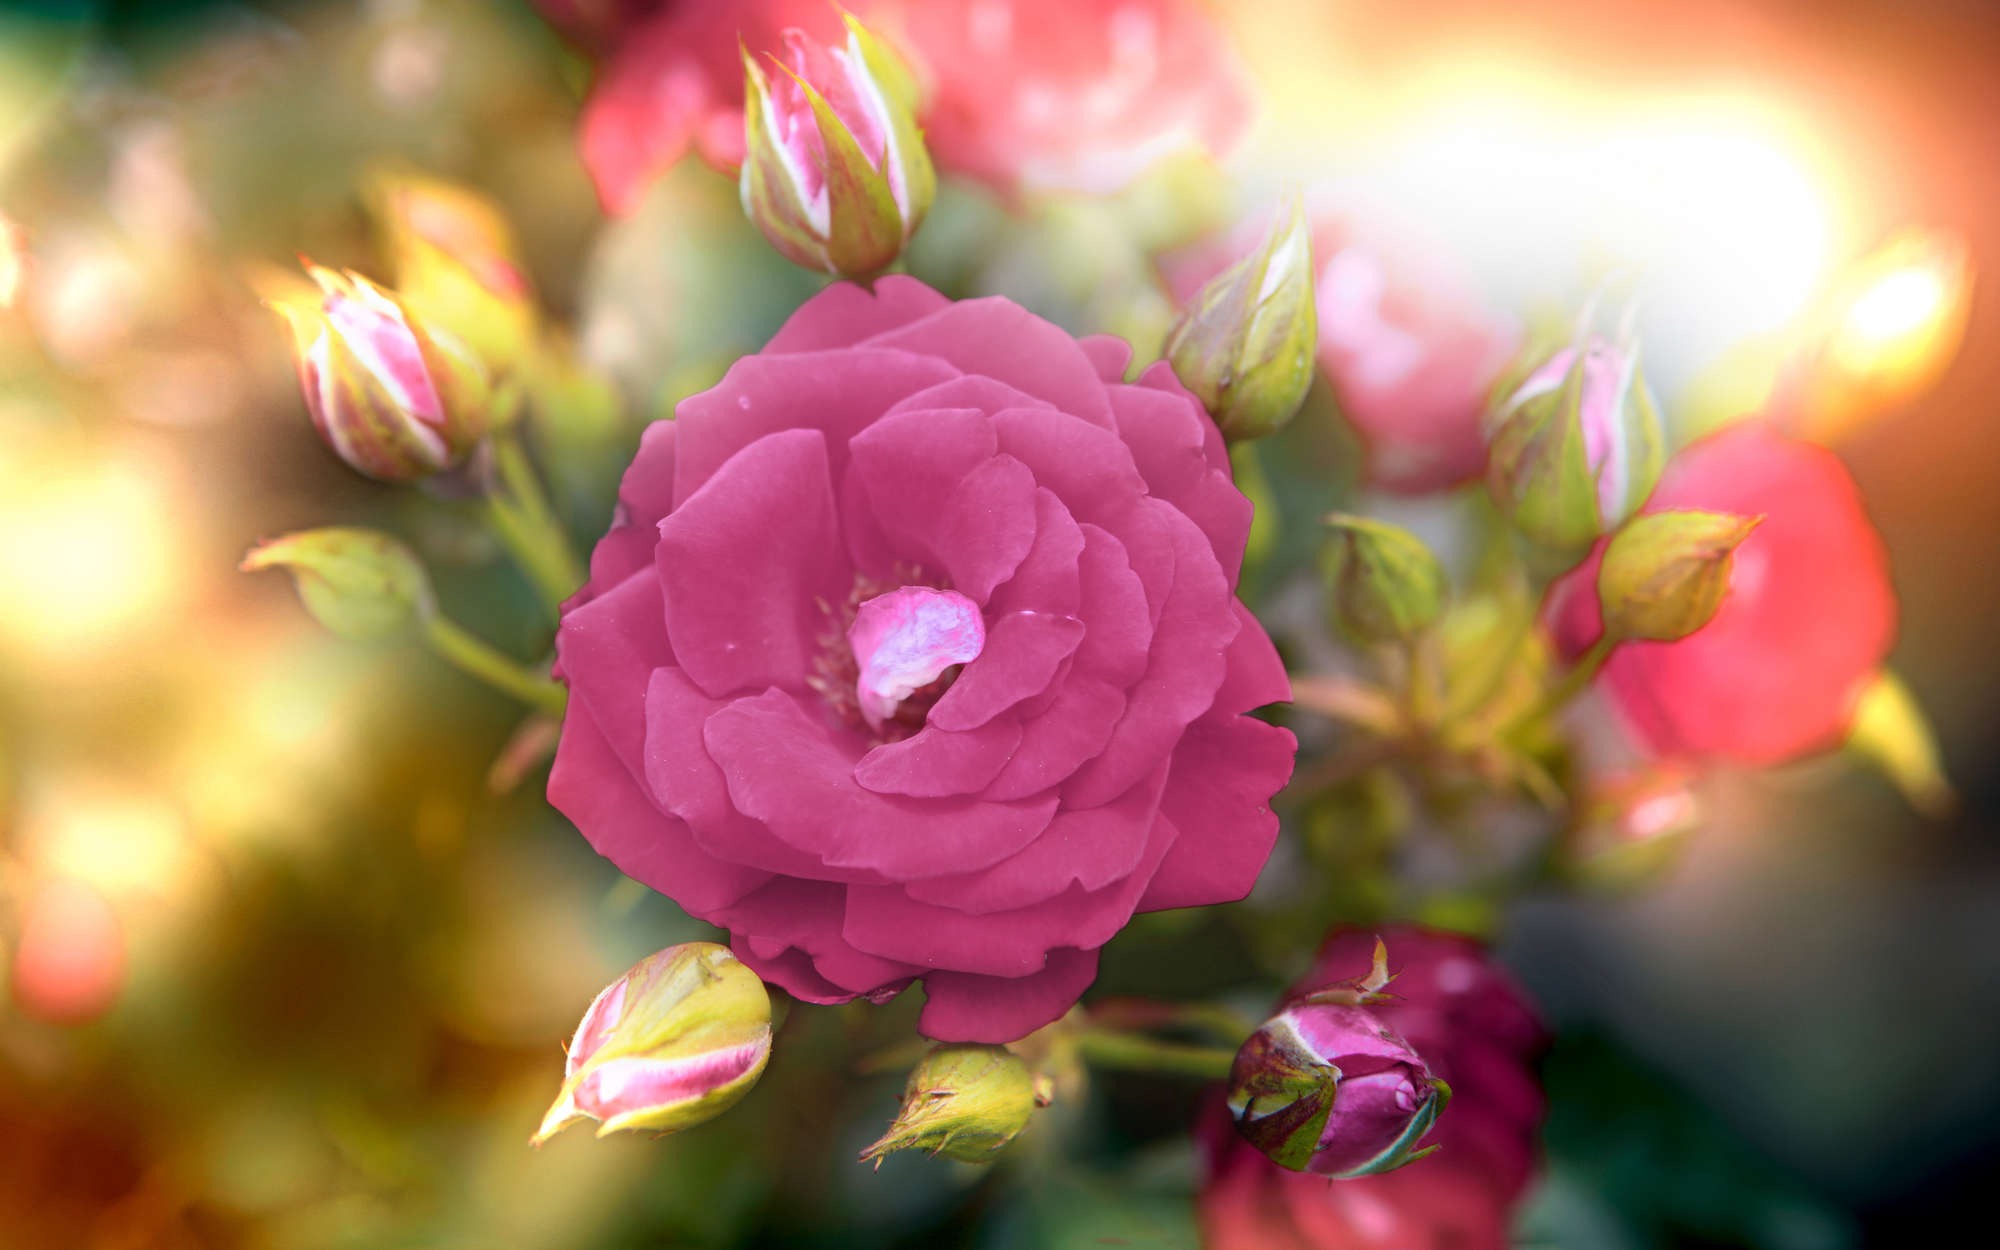             Fototapete Blume mit Blüte in pink – Perlmutt Glattvlies
        